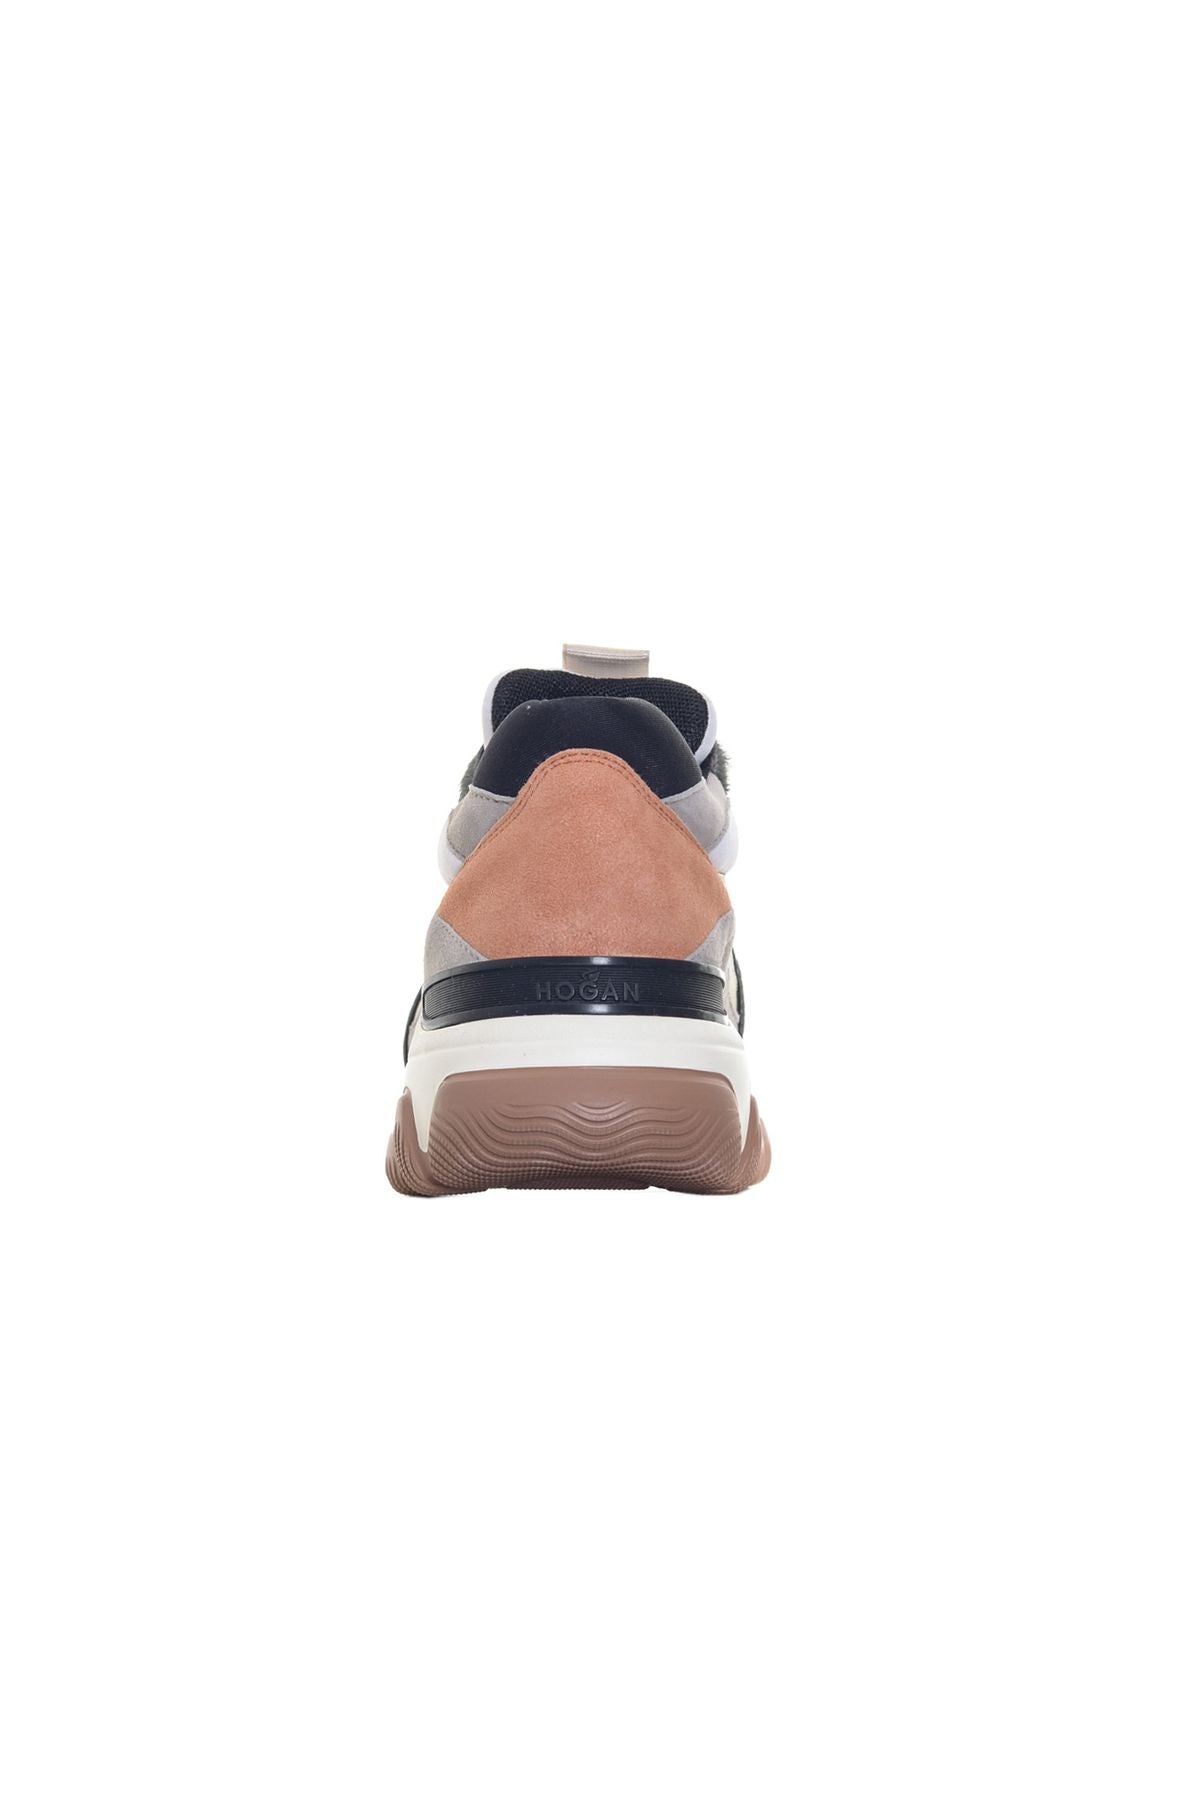 HOGAN Spring/Summer Leather Sneakers